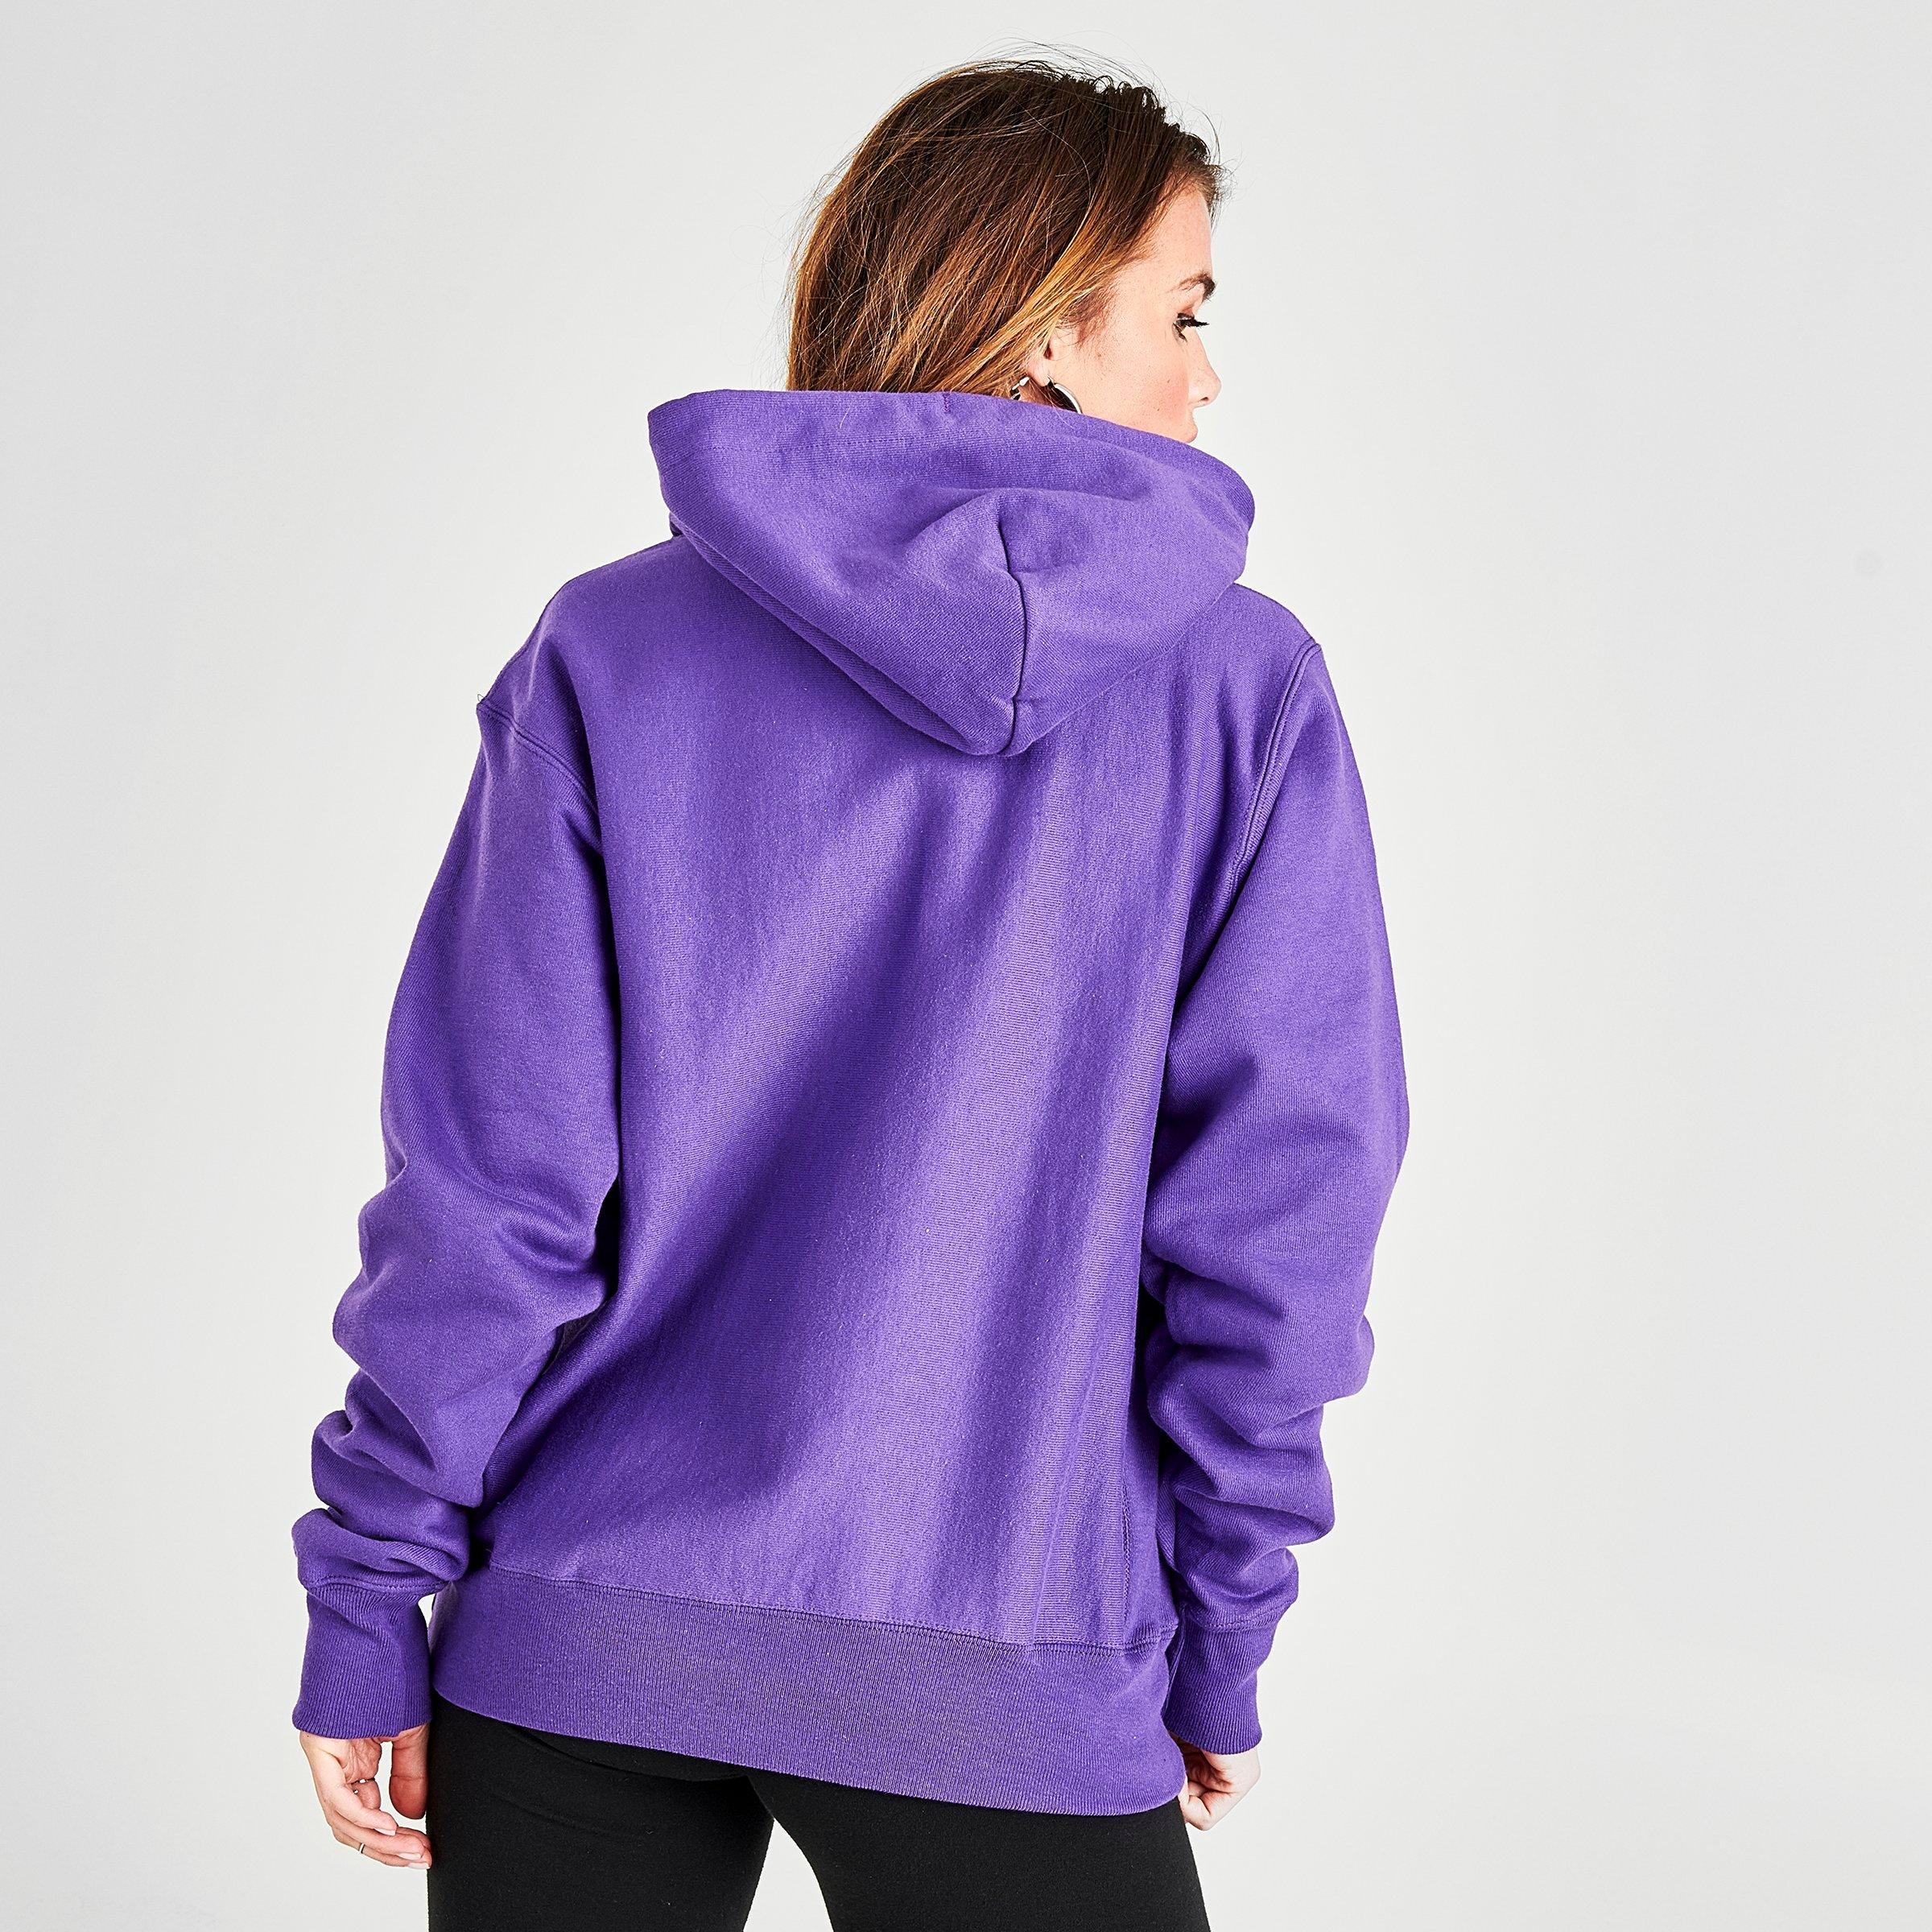 lilac champion hoodie women's